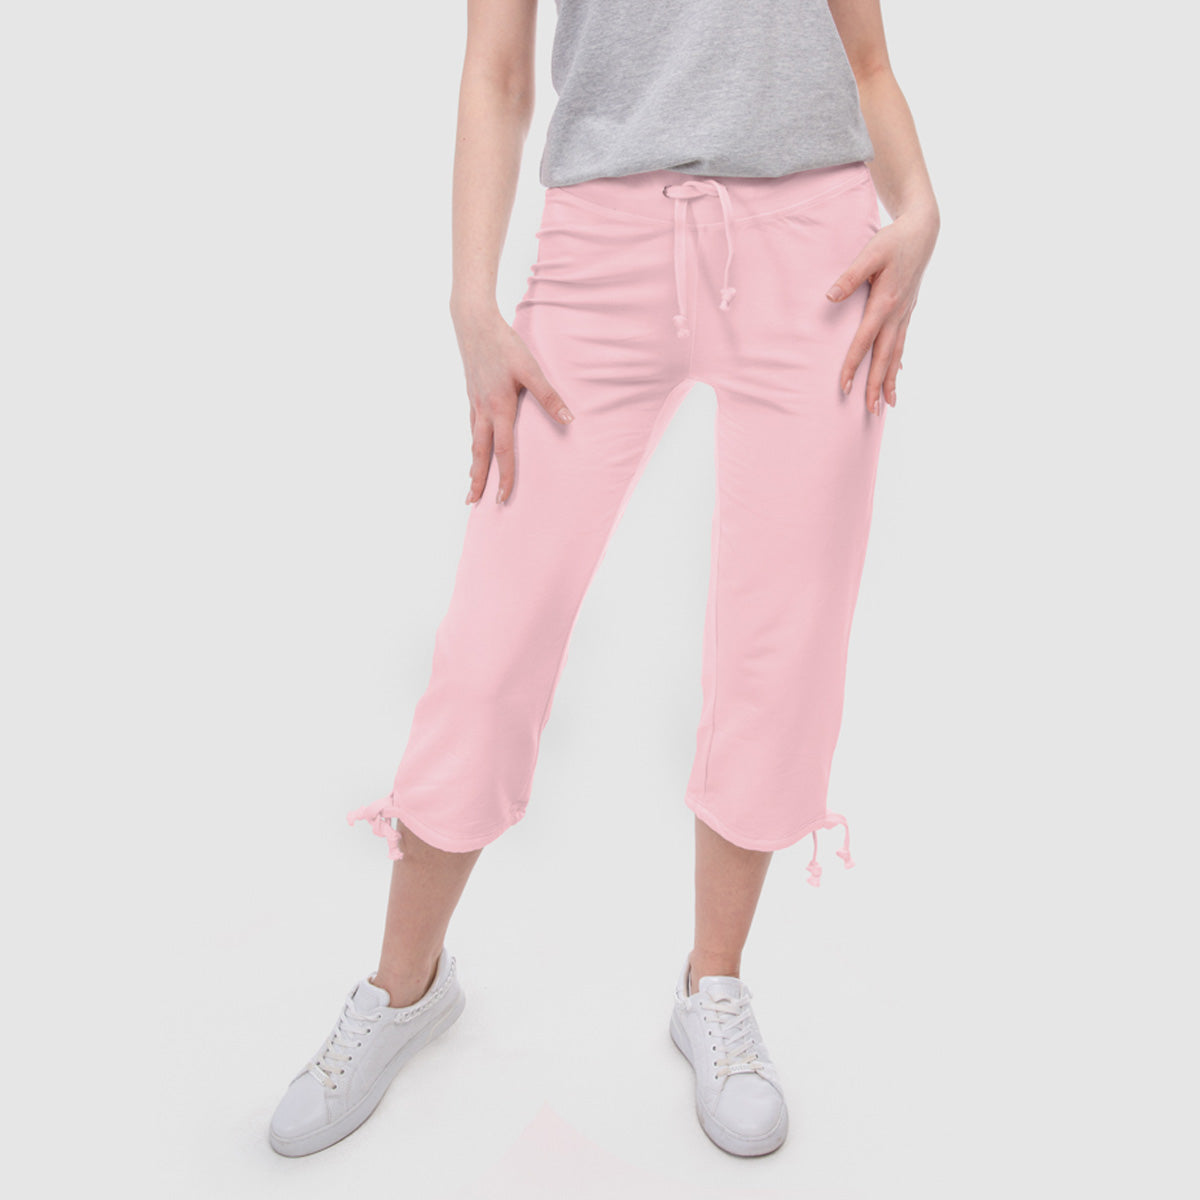 donna-conny-cotone organico-34-pantaloni-bianco-zoomin